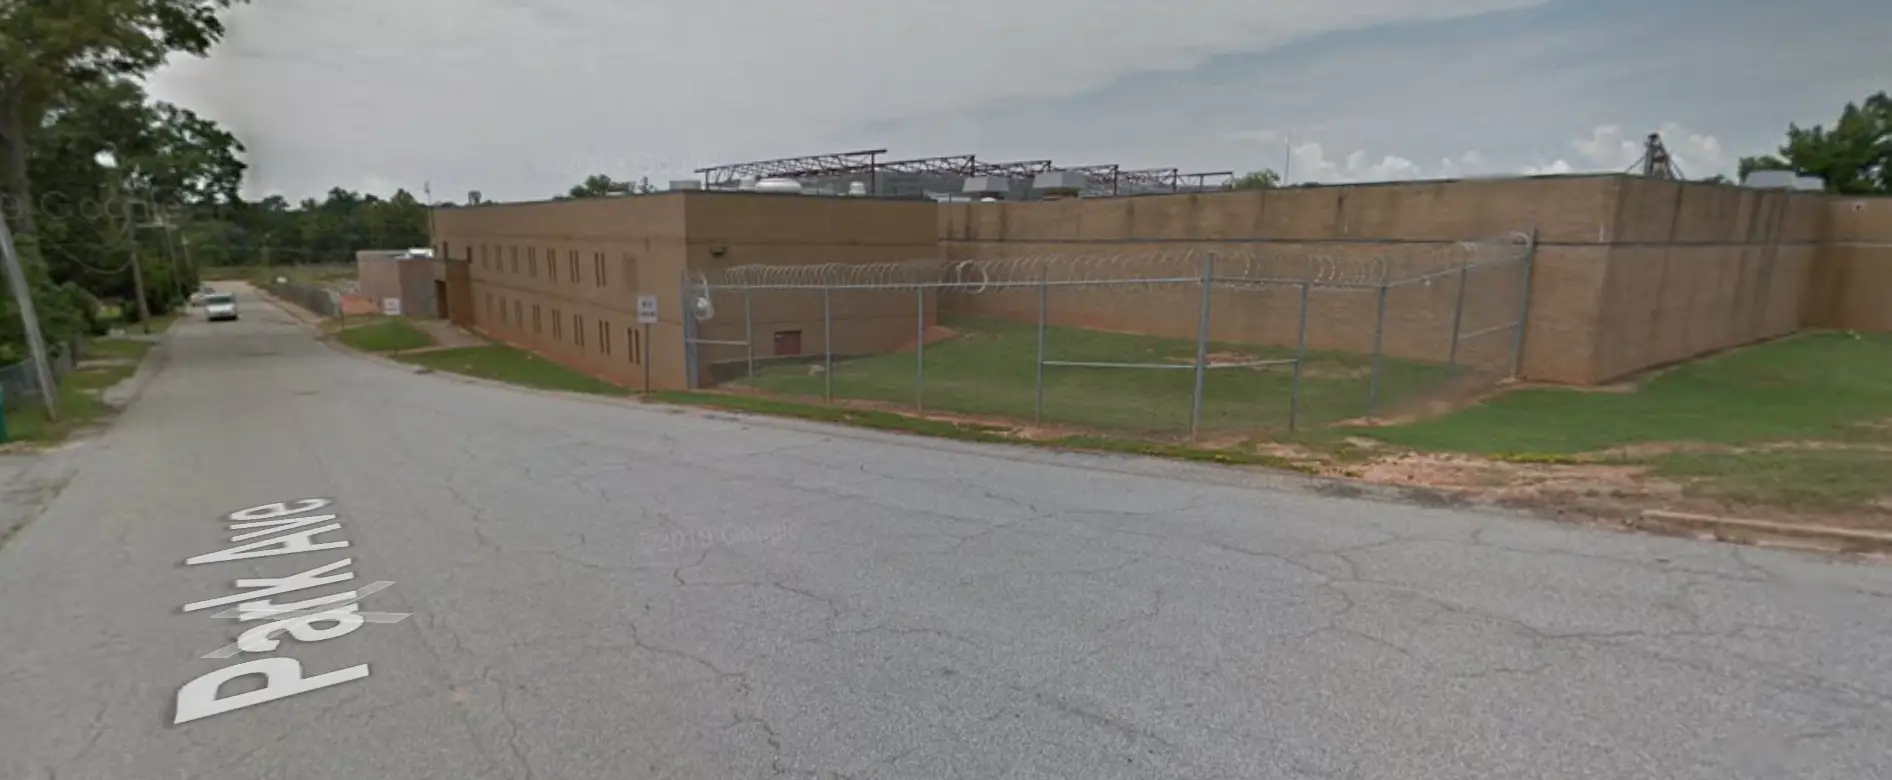 Greenwood County Detention Center, Greenwood, South Carolina